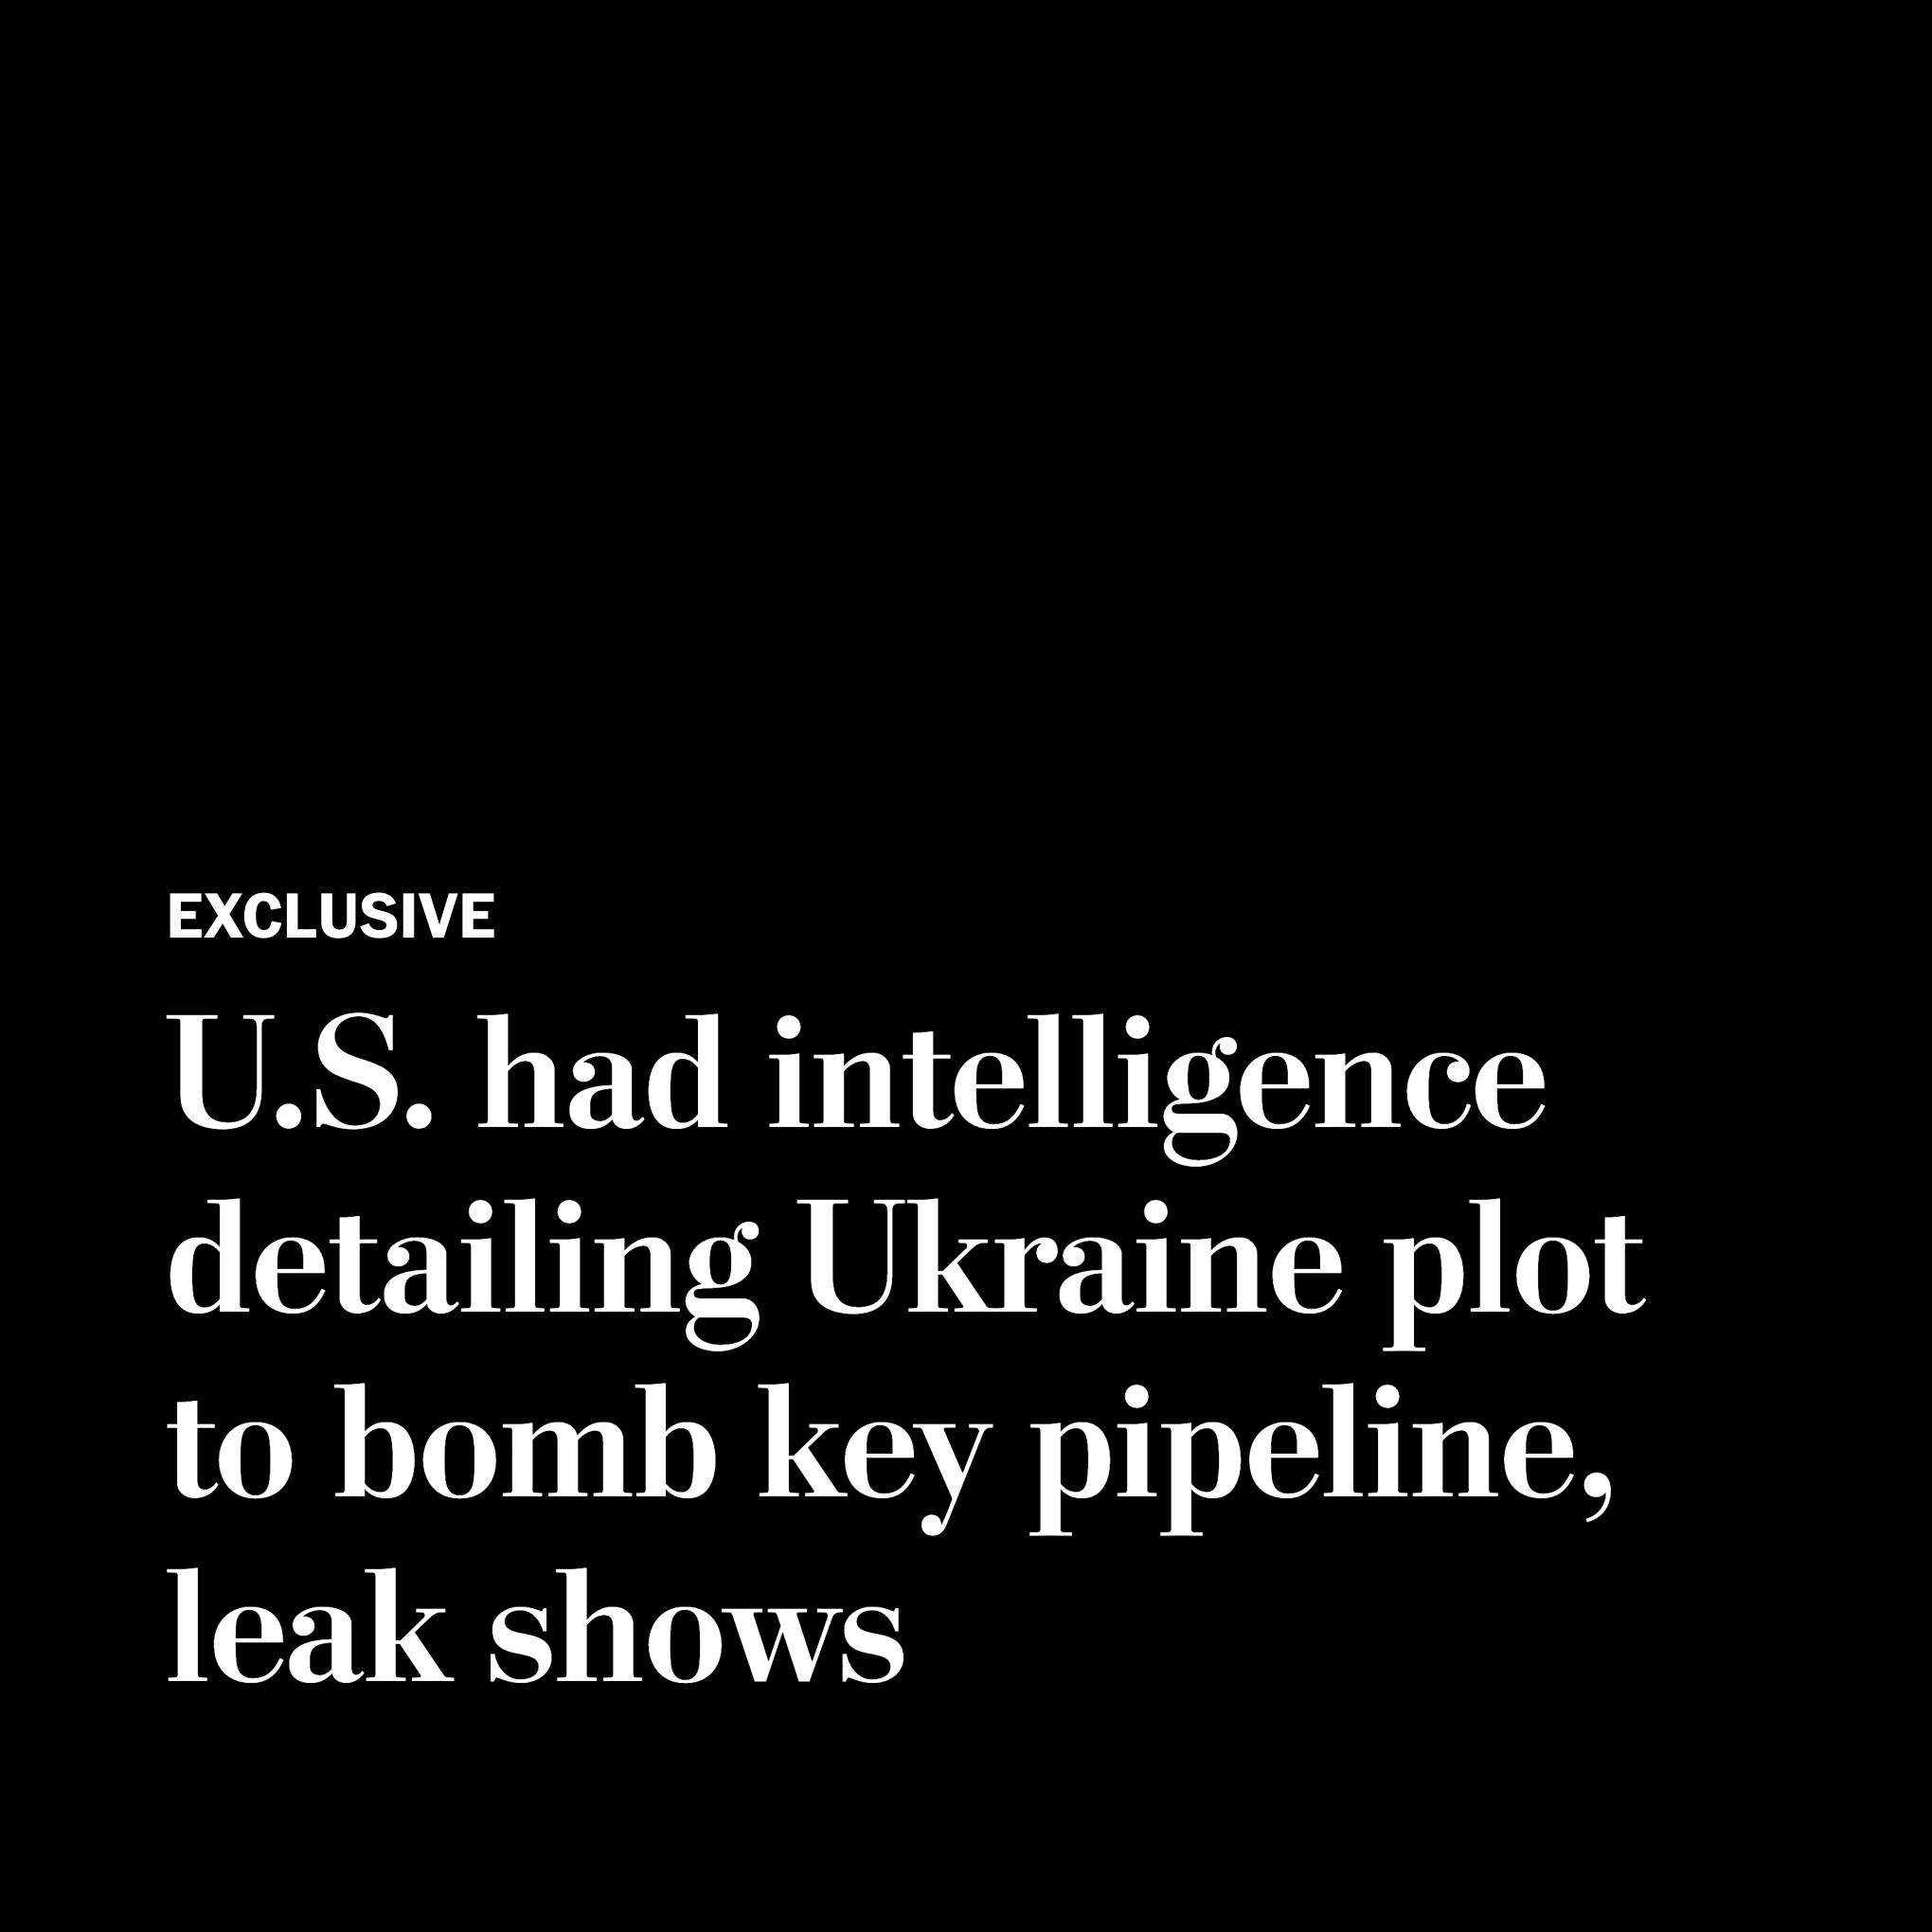 Exclusive: U.S. had intelligence detailing Ukraine plot to bomb key pipeline, leak shows